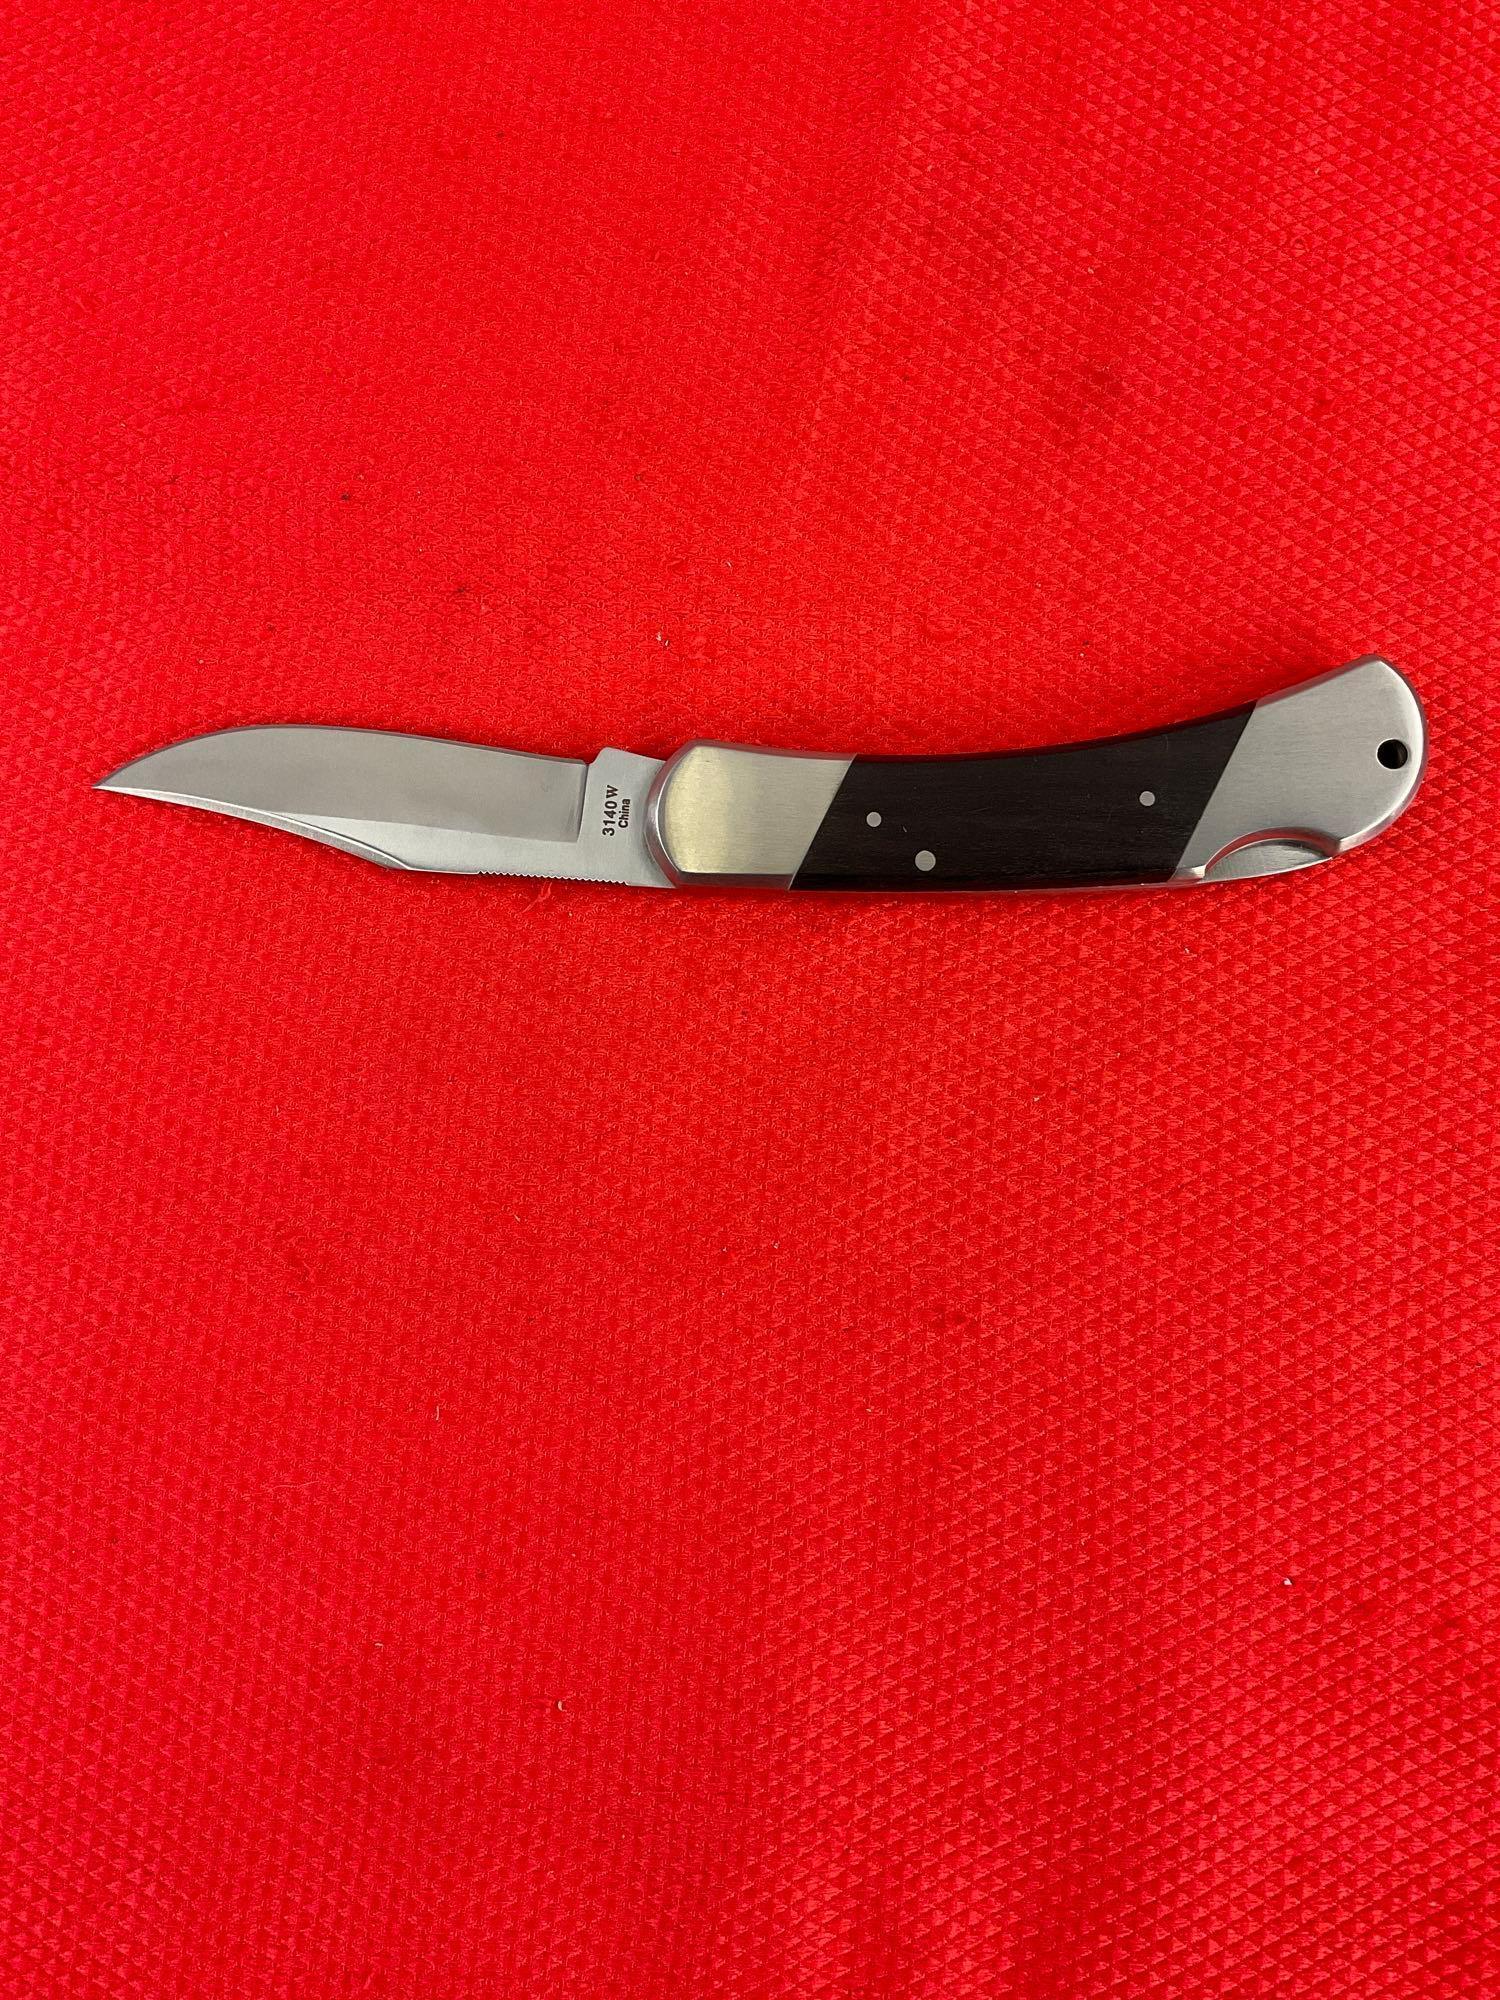 Kershaw 3.5" Steel Folding Blade Lock Back Pocket Knife w/ Sheath Model No. 3140RMEF. NIB. See pi...